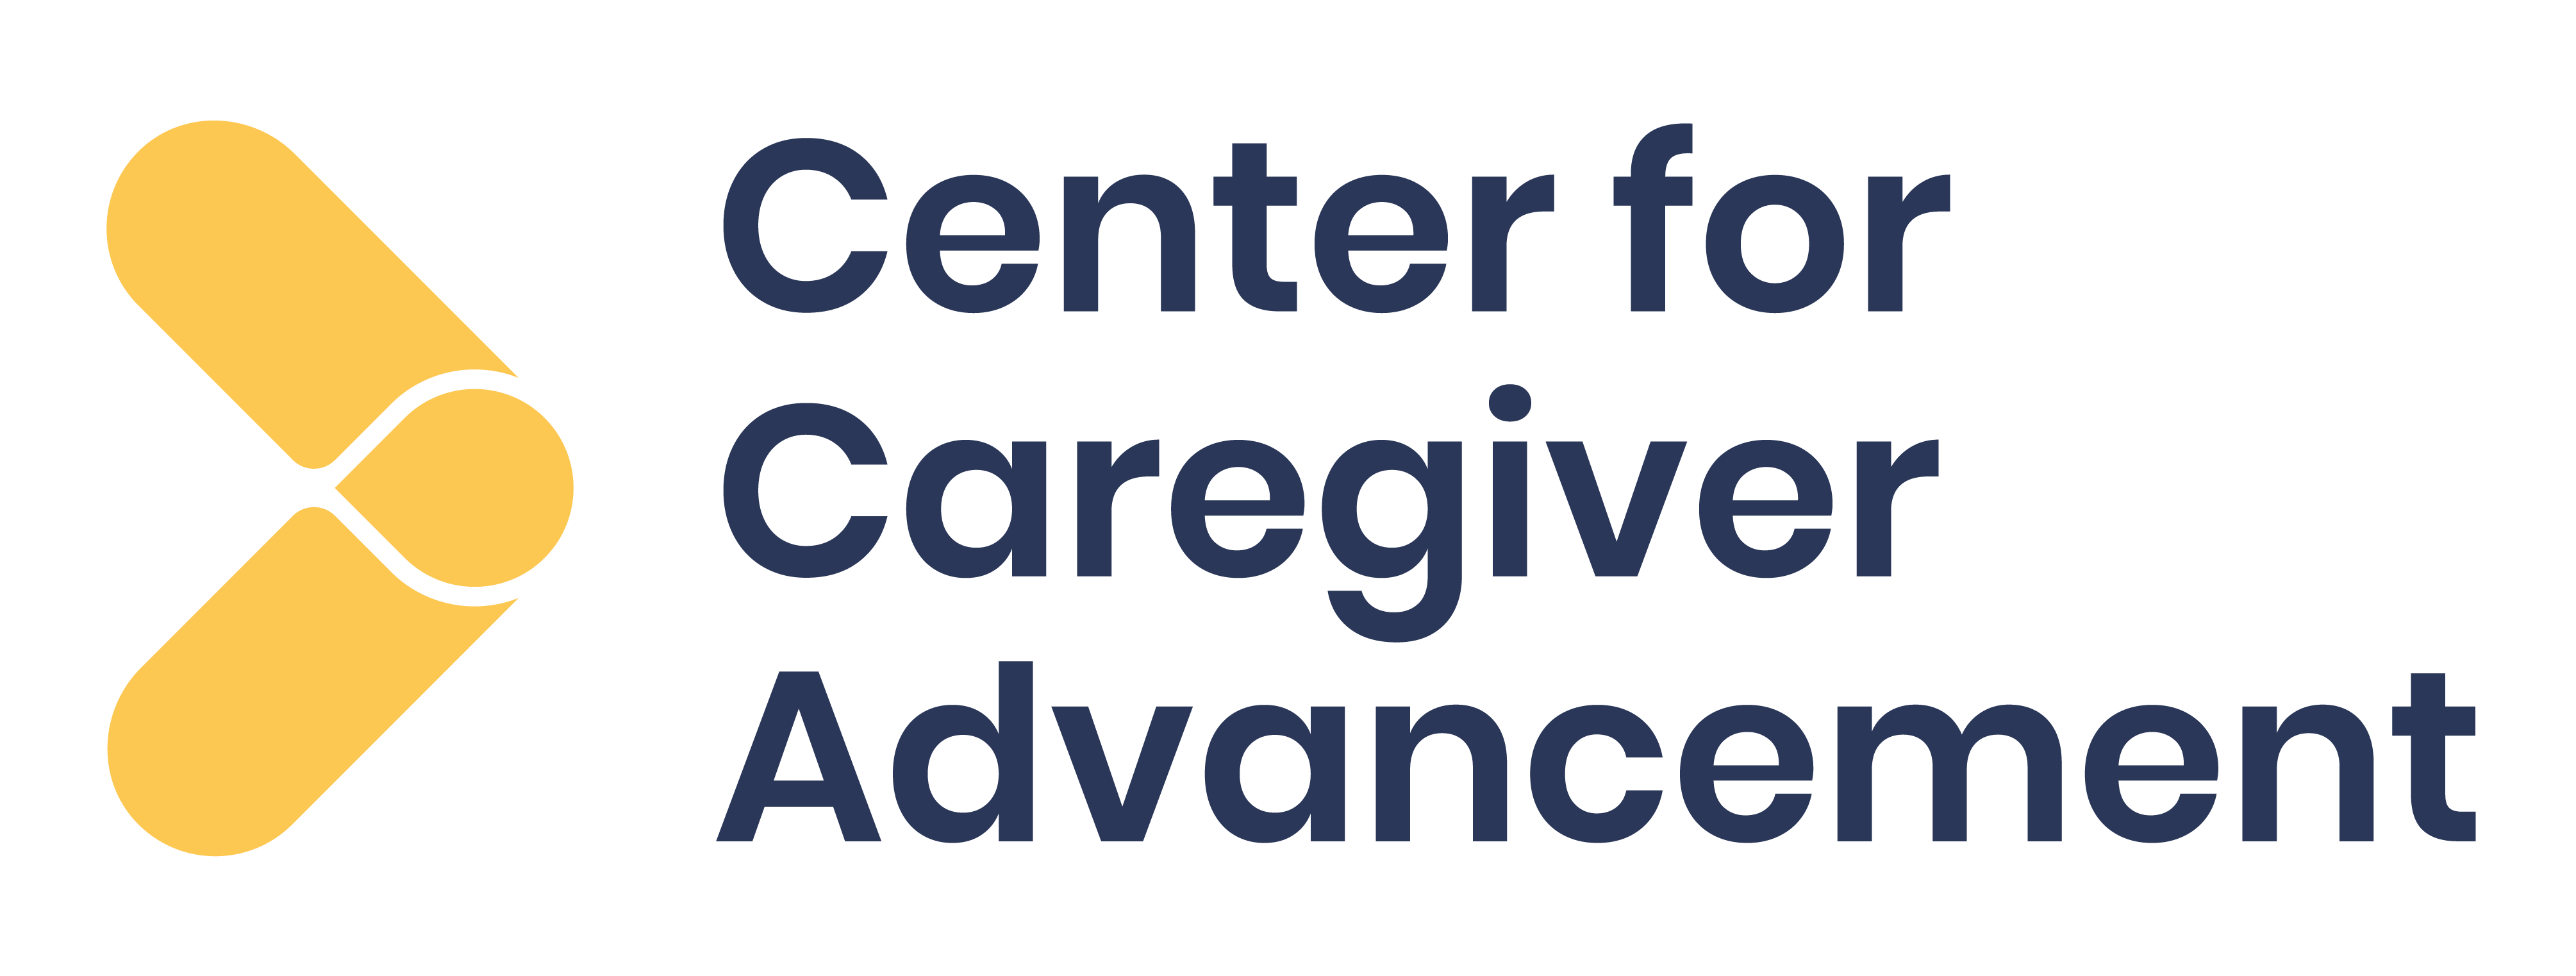 Center for Caregiver Advancement logo